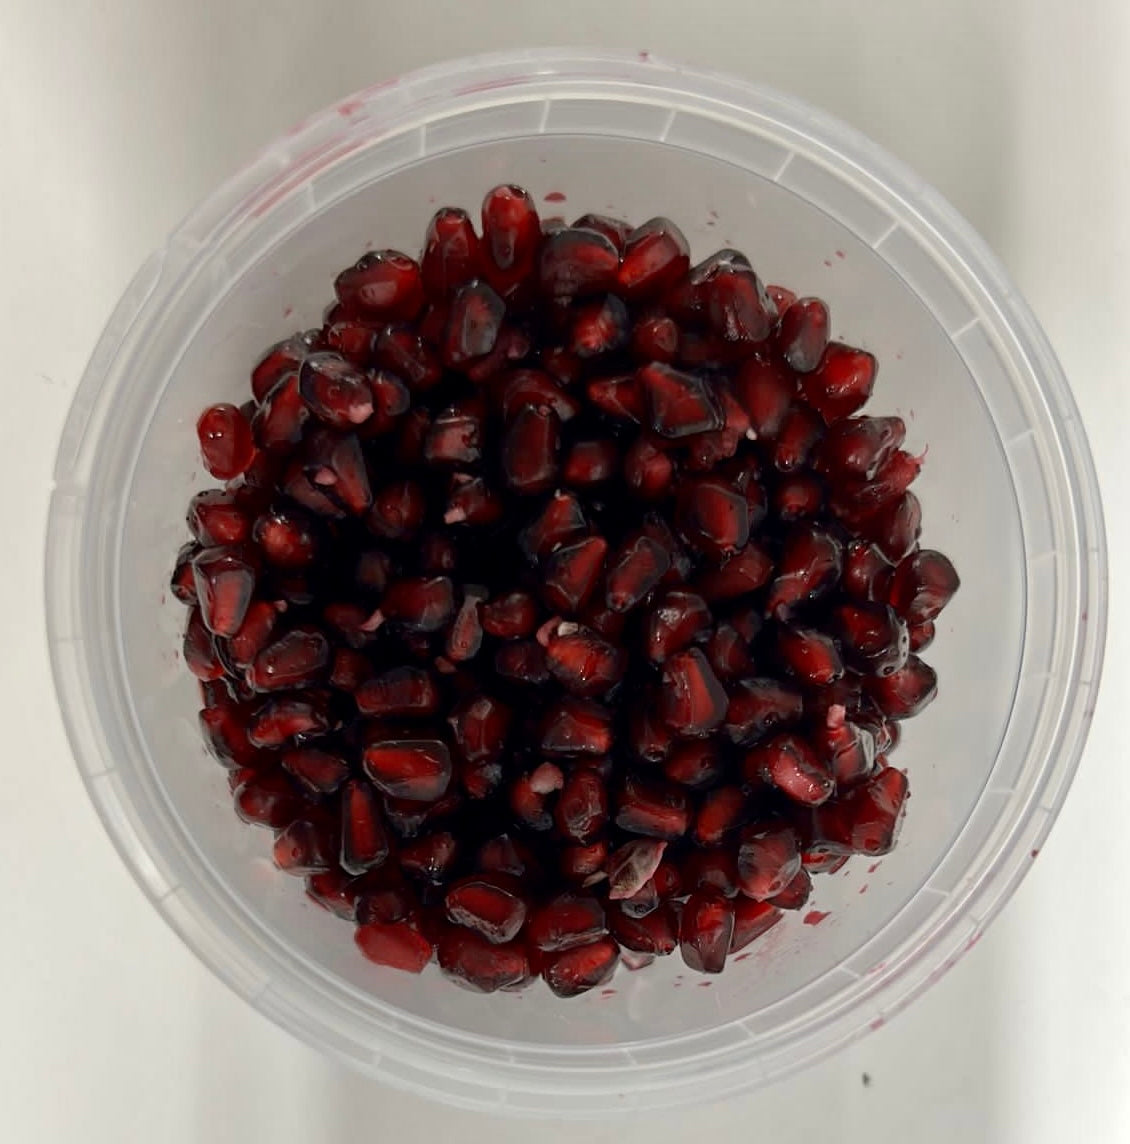 Tub of Pomegranate seeds